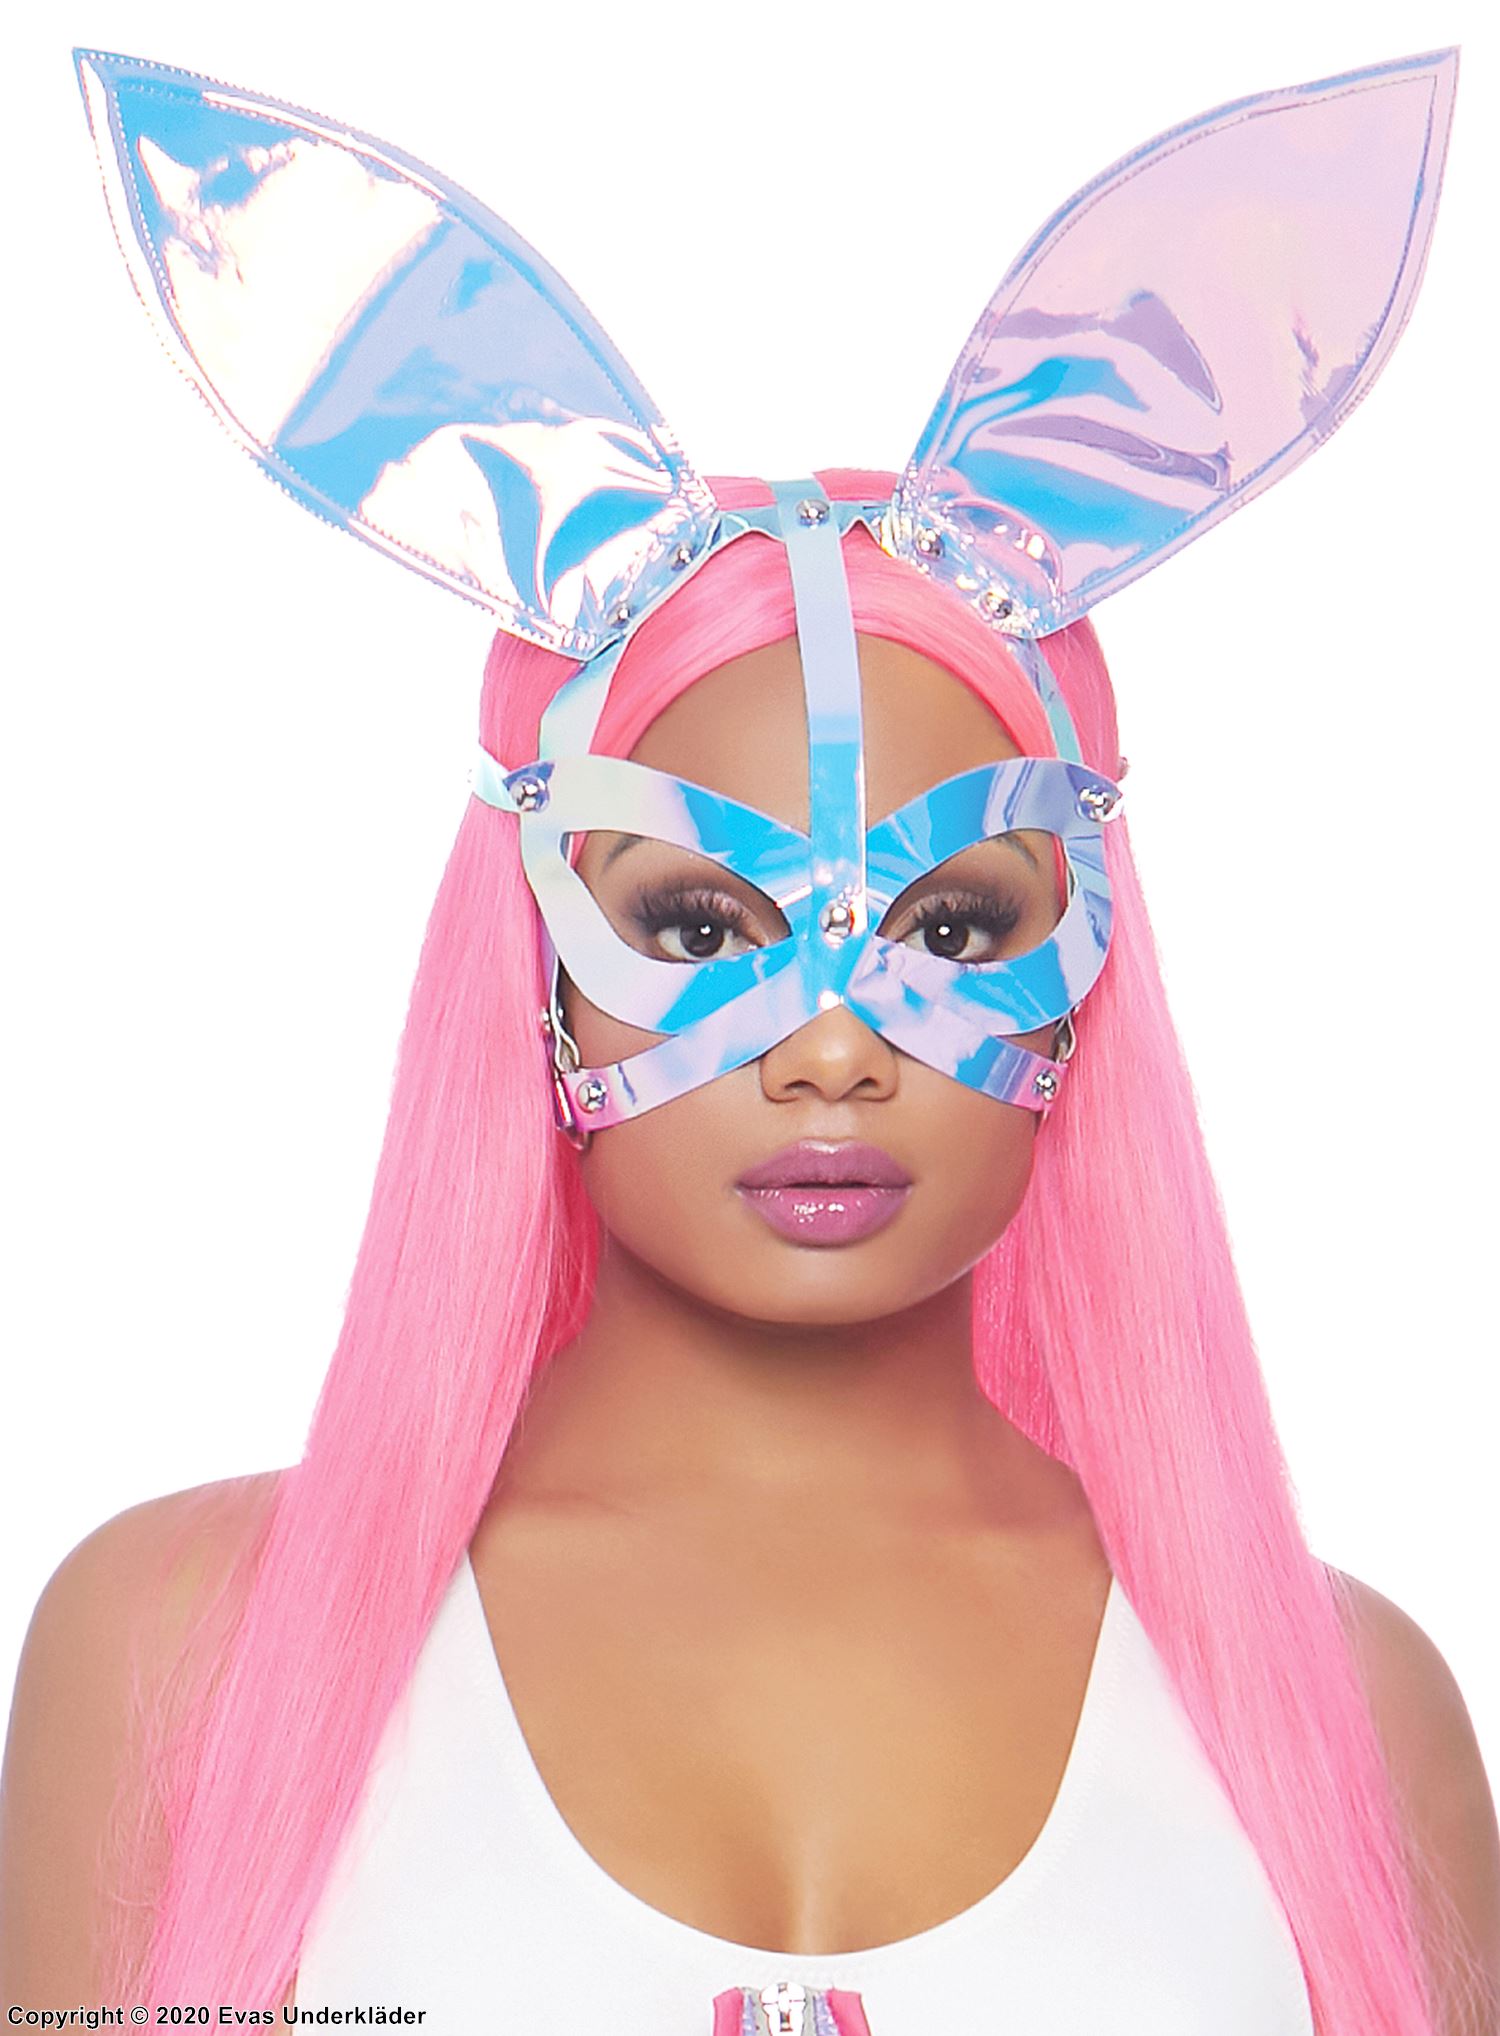 Bunny (woman), costume mask, iridescent fabric, big ears